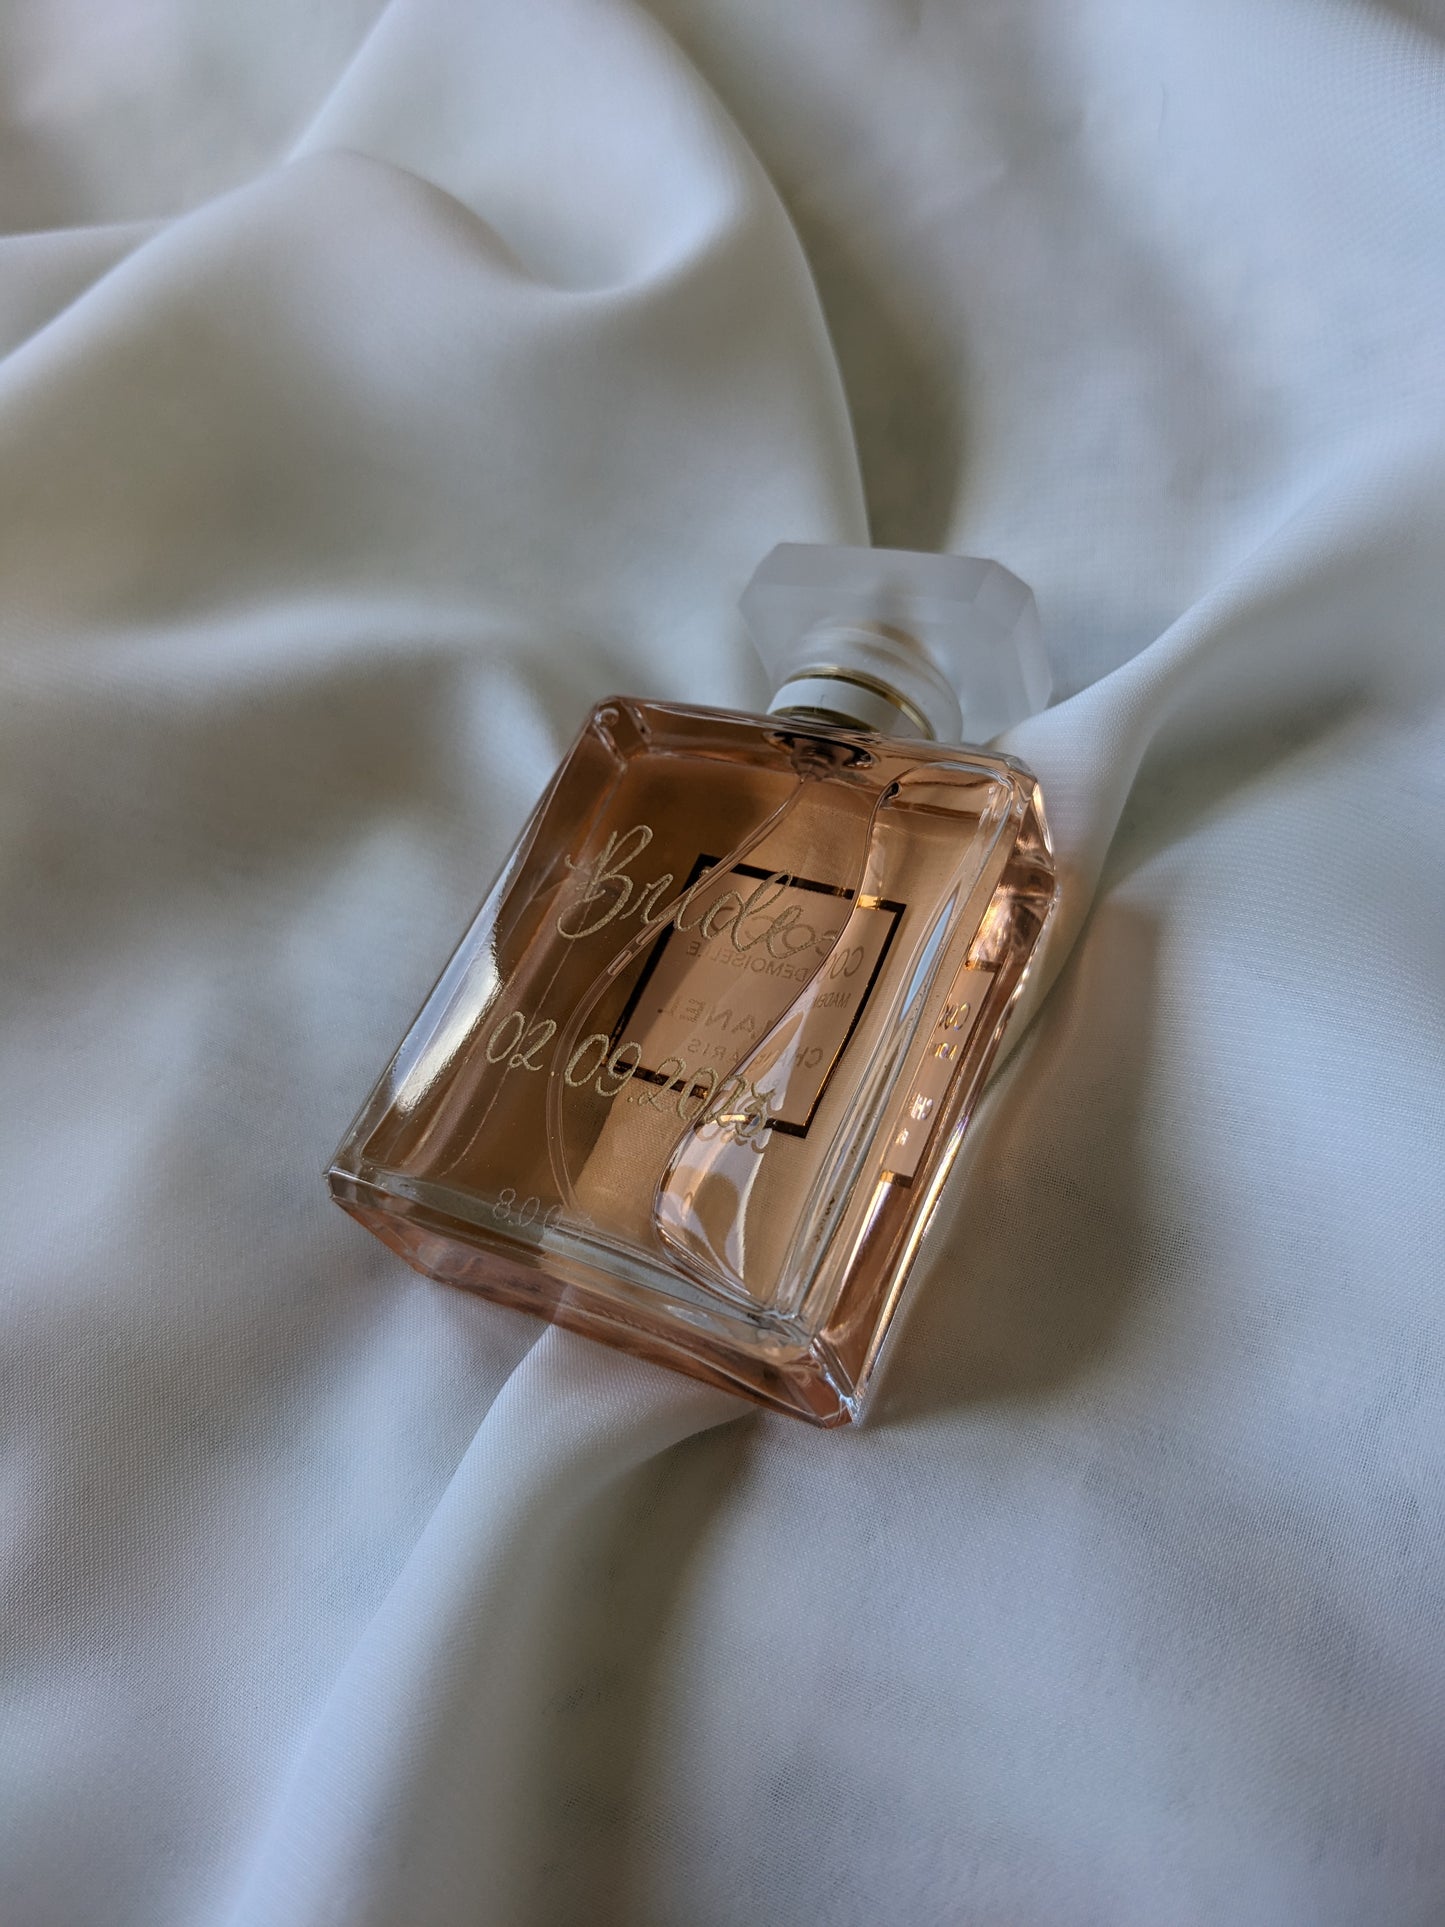 Perfume engraving